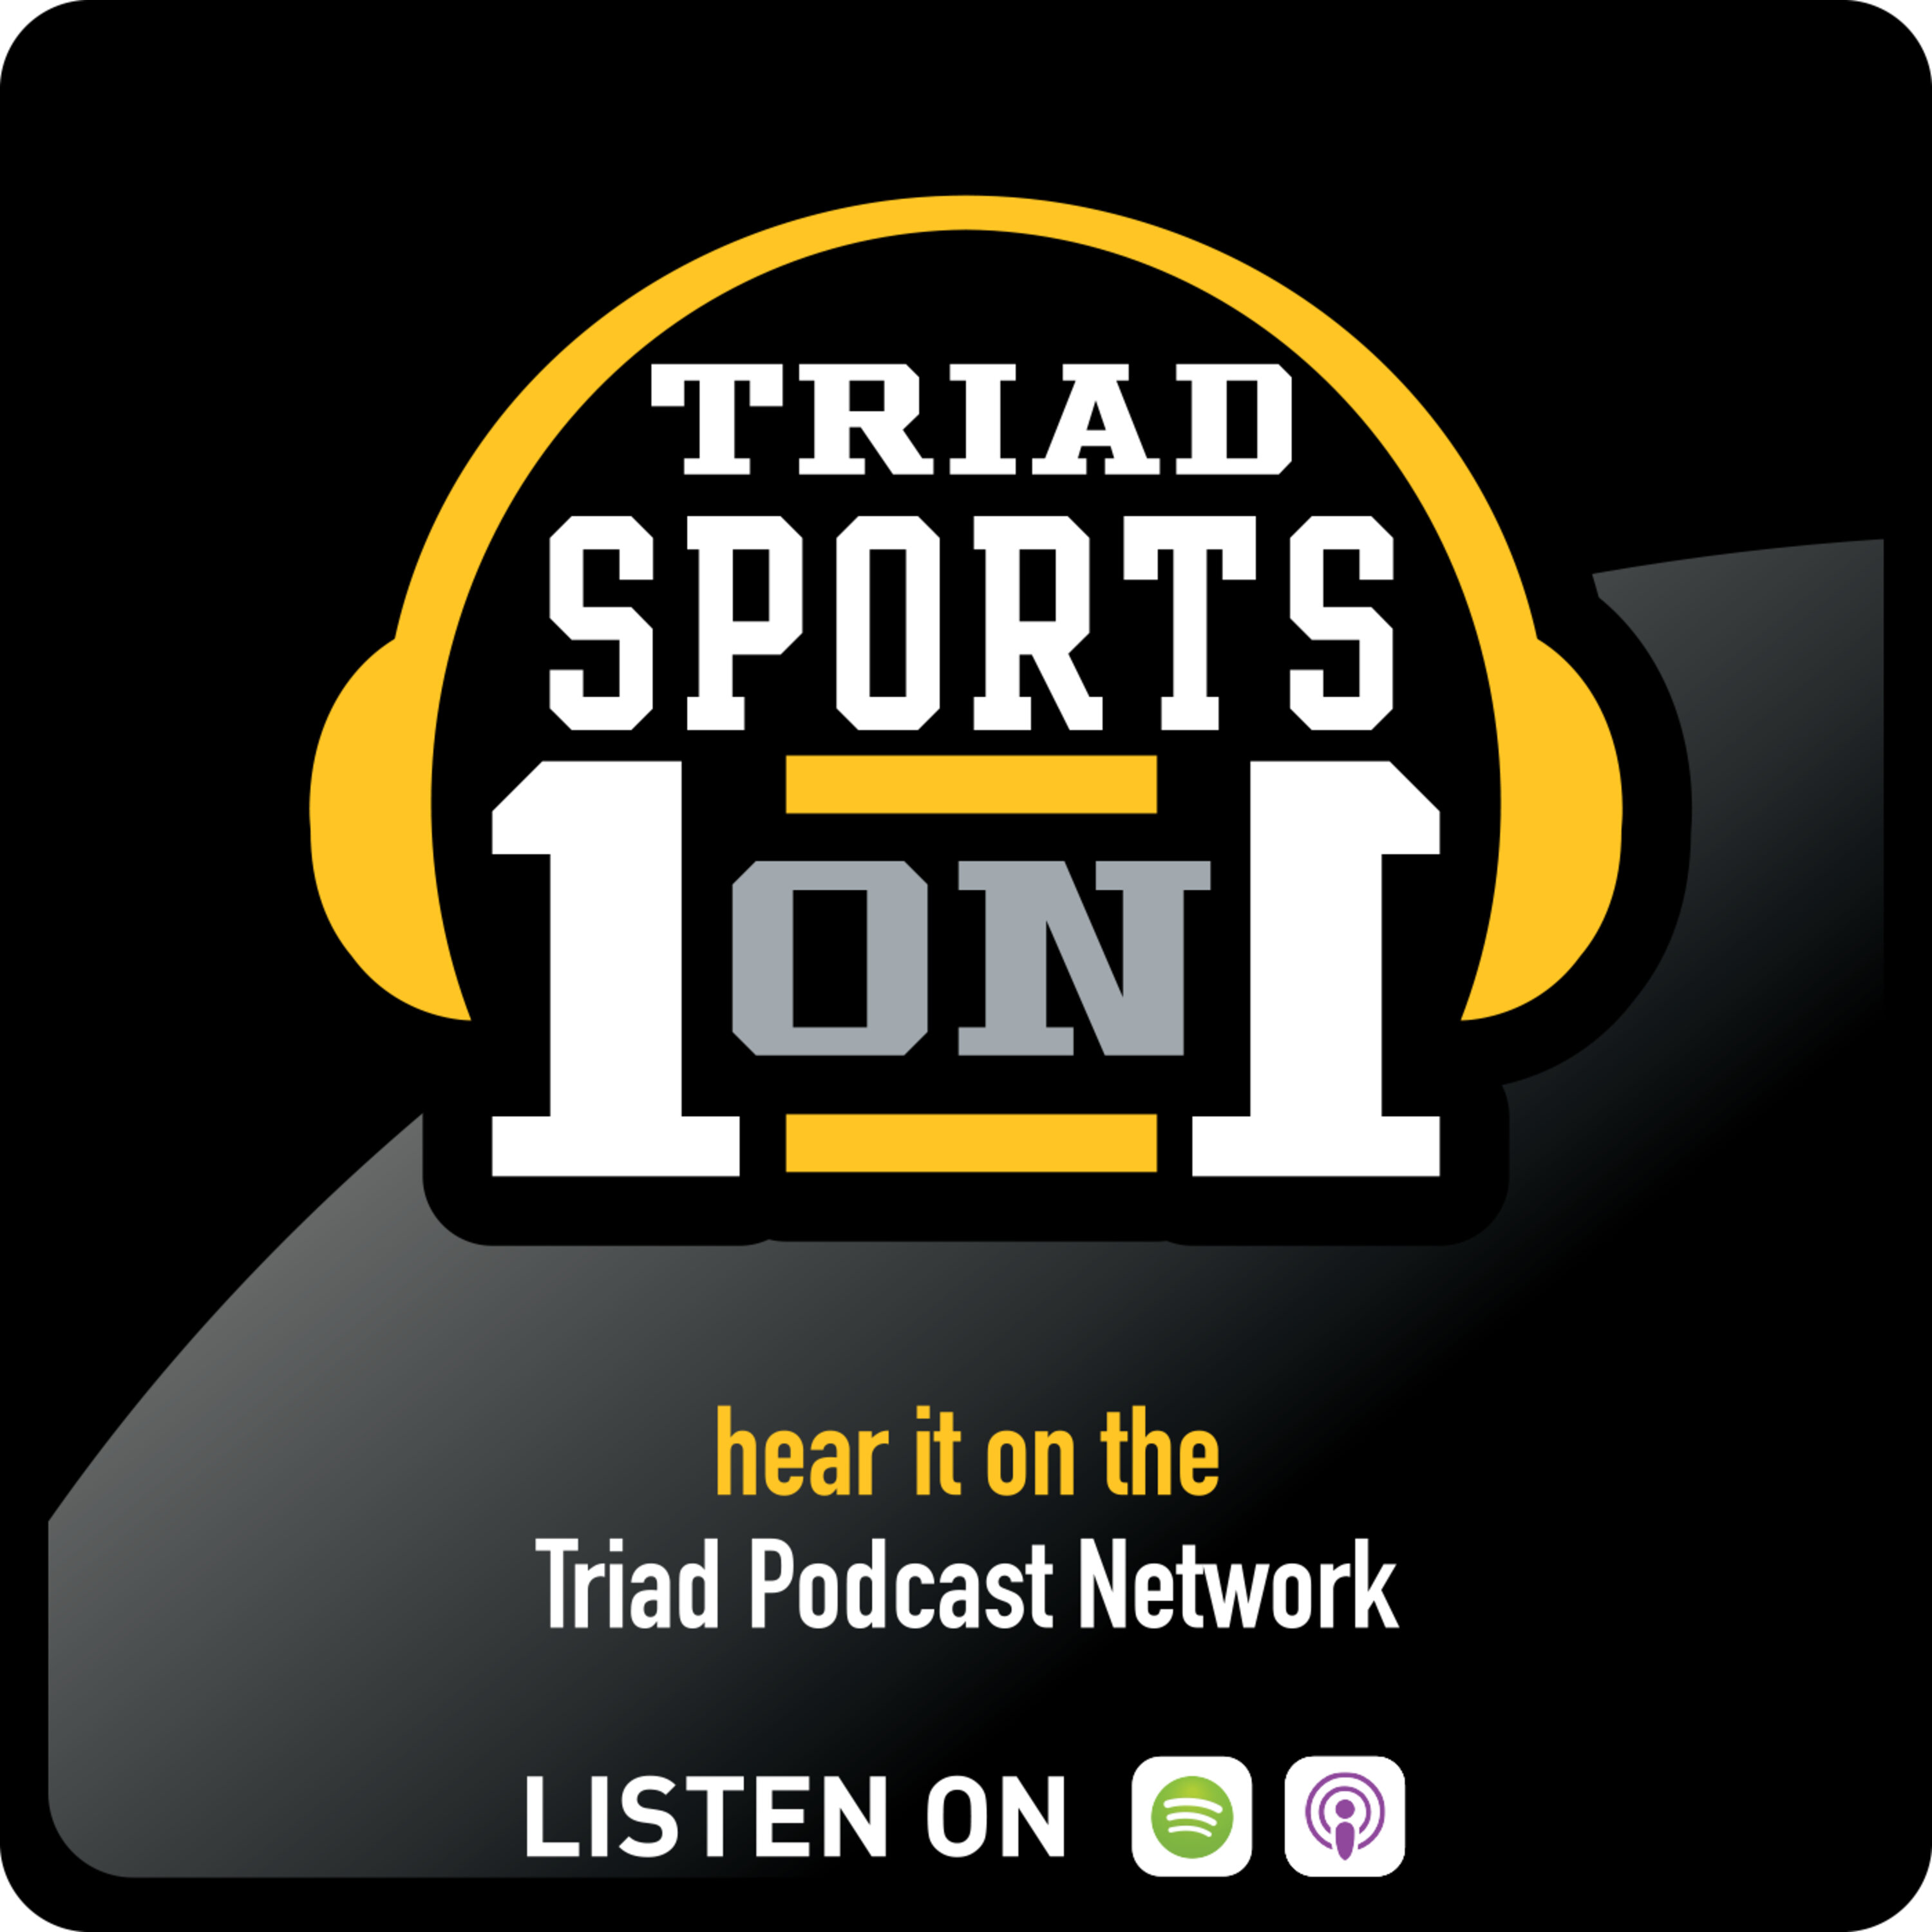 Triad Sports 1on1 - E.P. Reese, Winston-Salem Dash